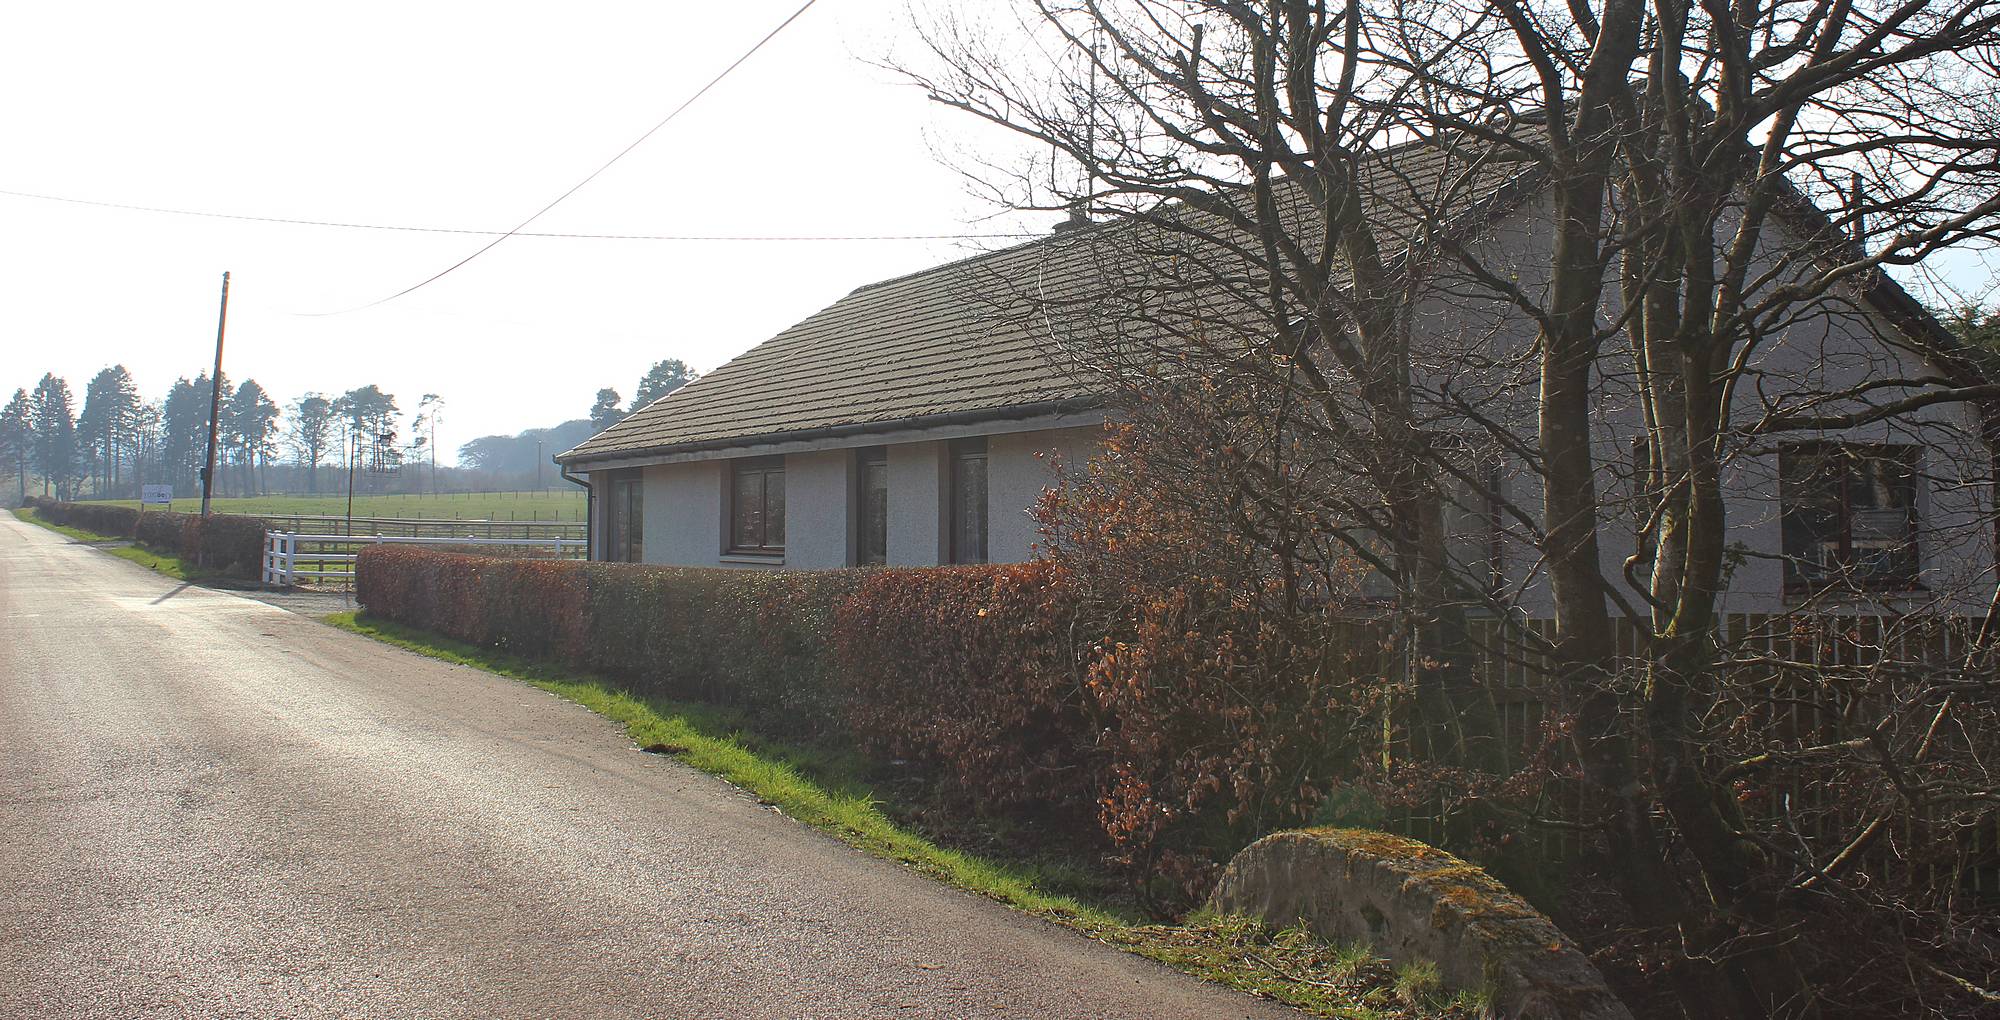 Cottage before turnoff to Stockbriggs Estate